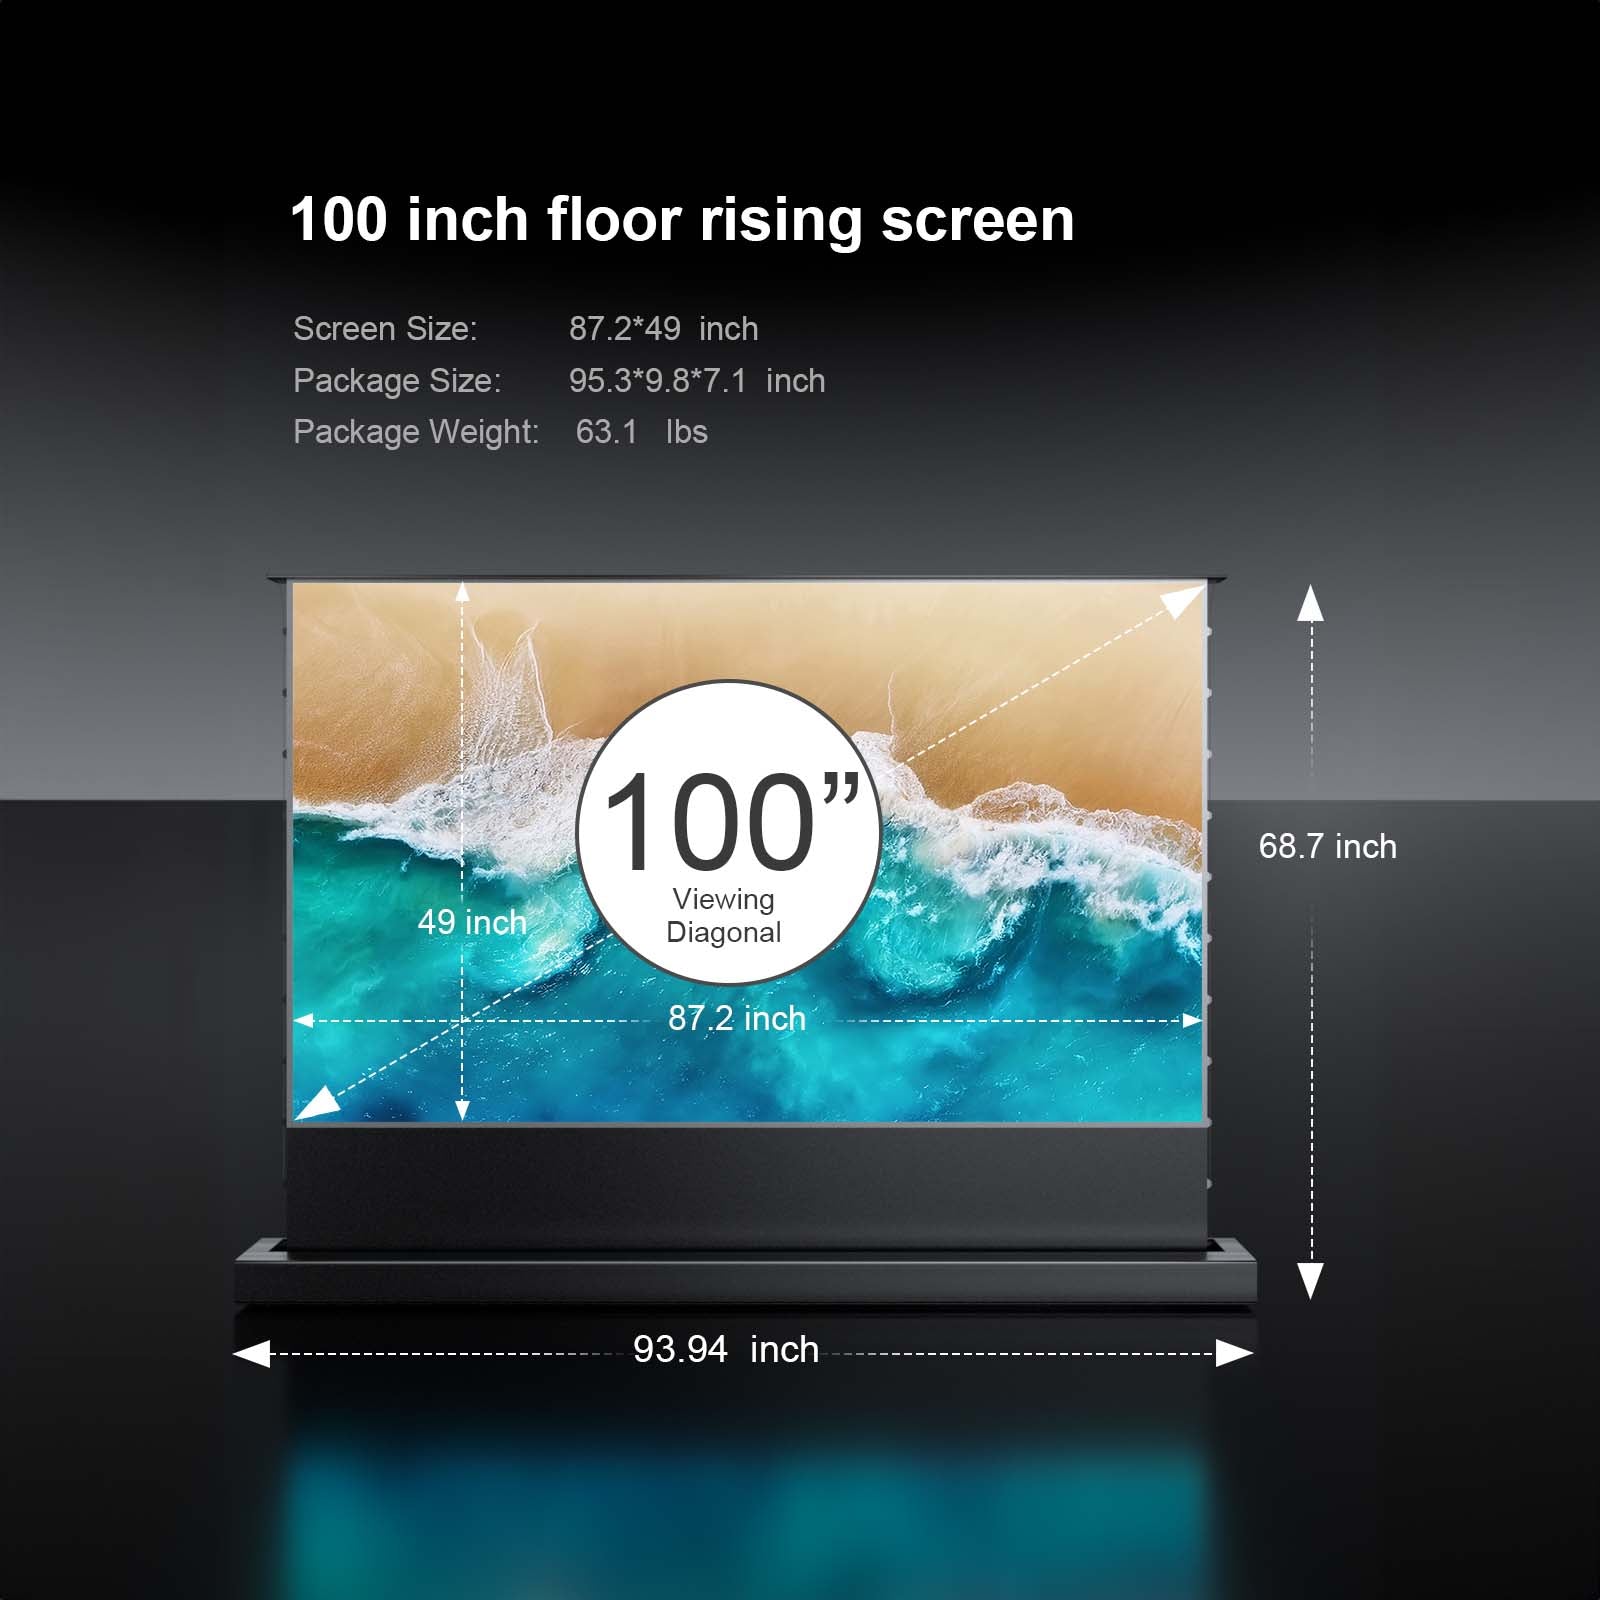 LTV-3500 Pro Plus 100''-120" AWOL Vision Acoustic ALR Floor Rising Screen Bundle